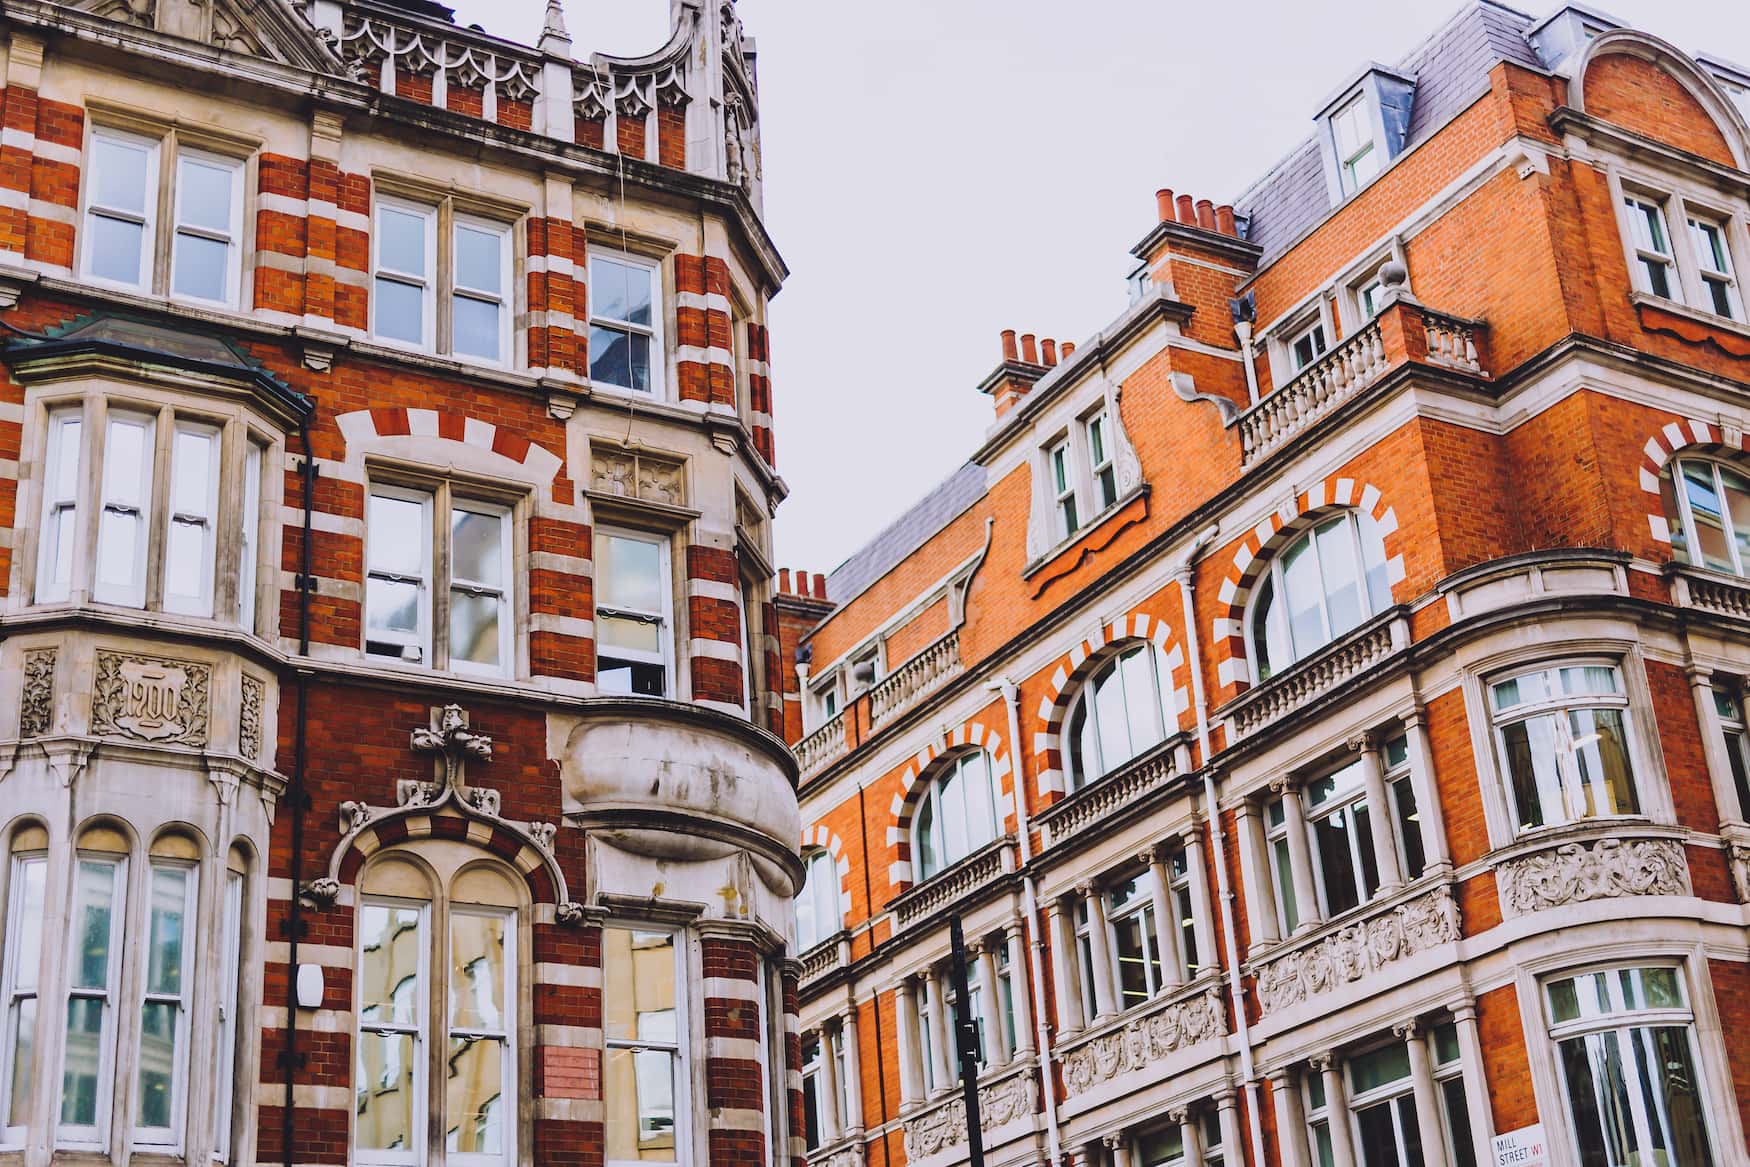 Häuserfassaden in Mayfair, London